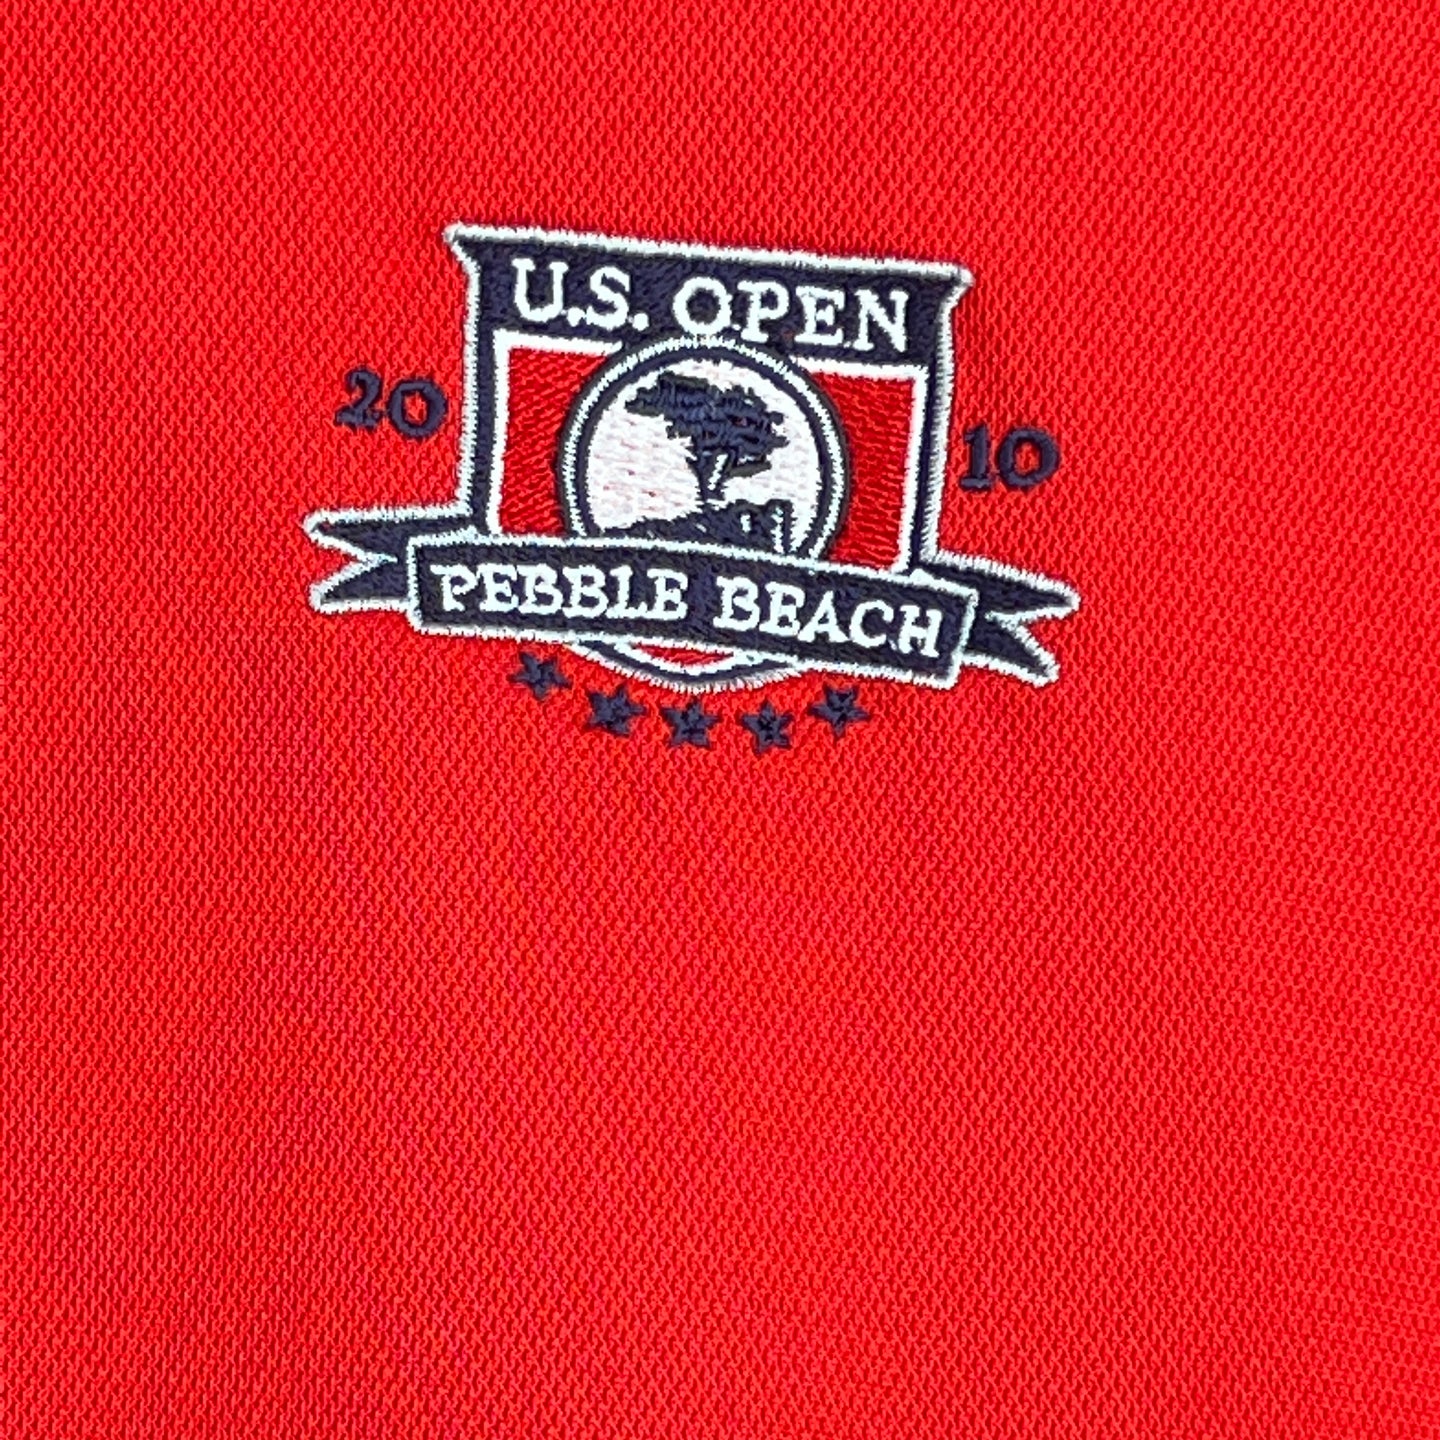 Nike Golf Dri-Fit Shirt Pebble Beach US Open Size XXL